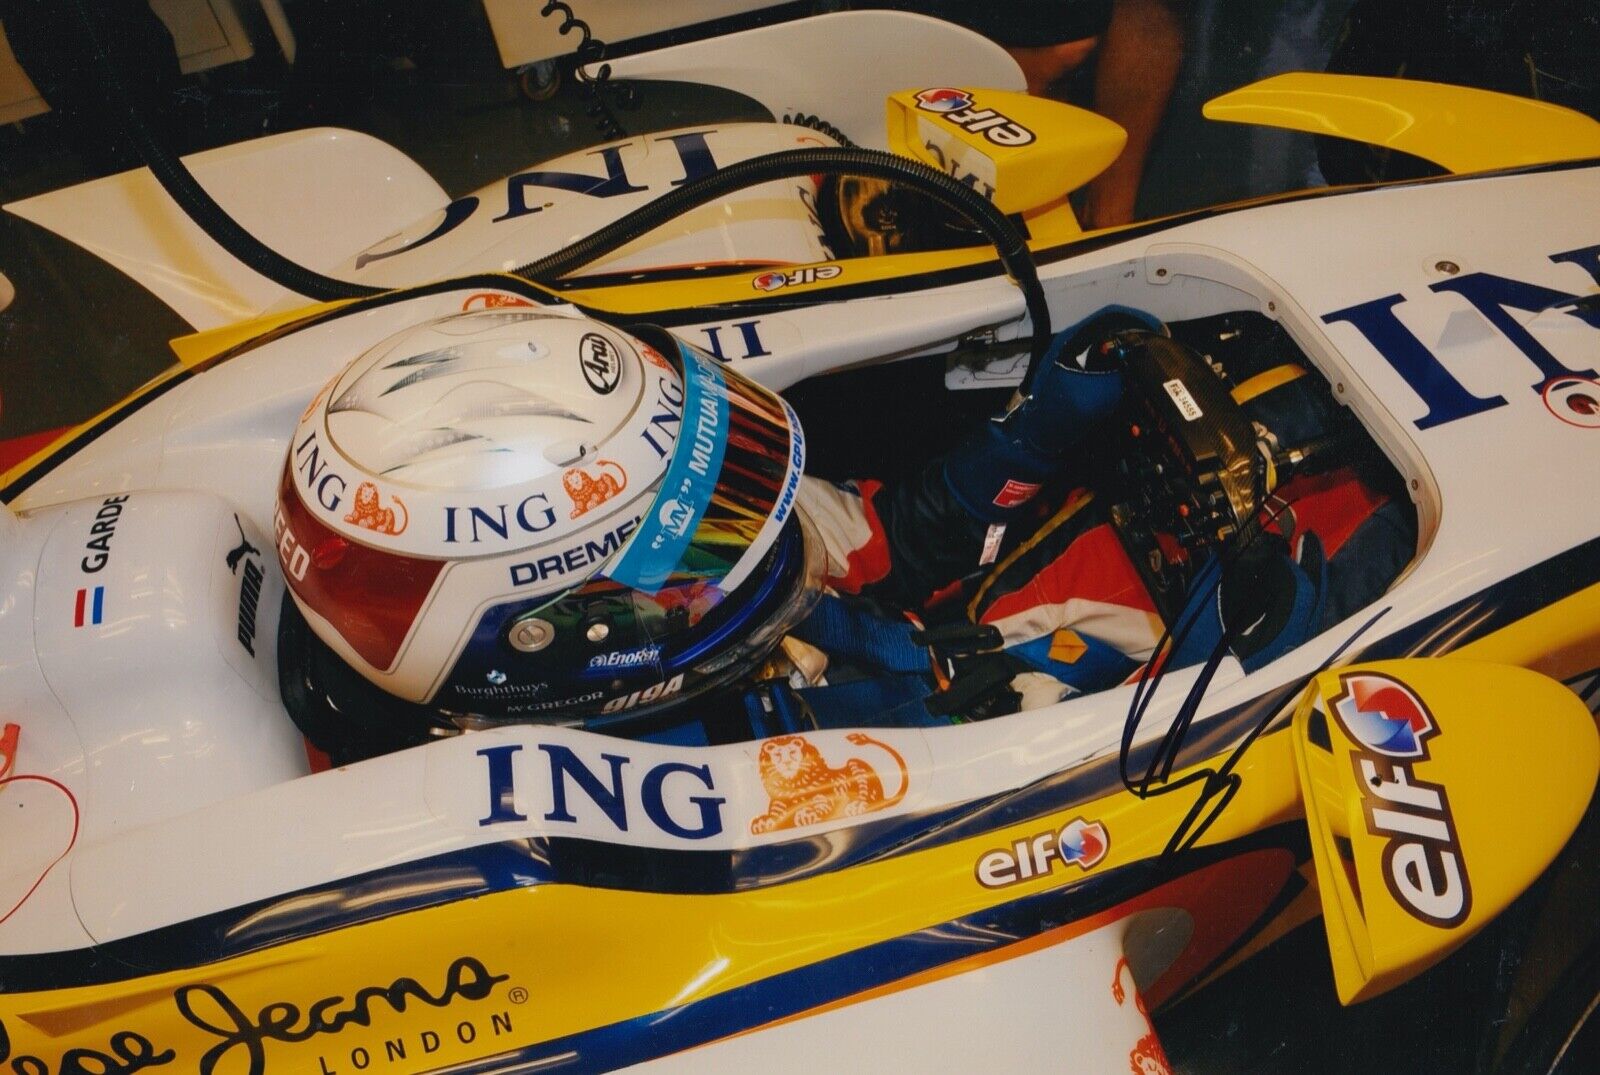 Giedo van der Garde Hand Signed 12x8 Photo Poster painting - Formula 1 Autograph - F1.